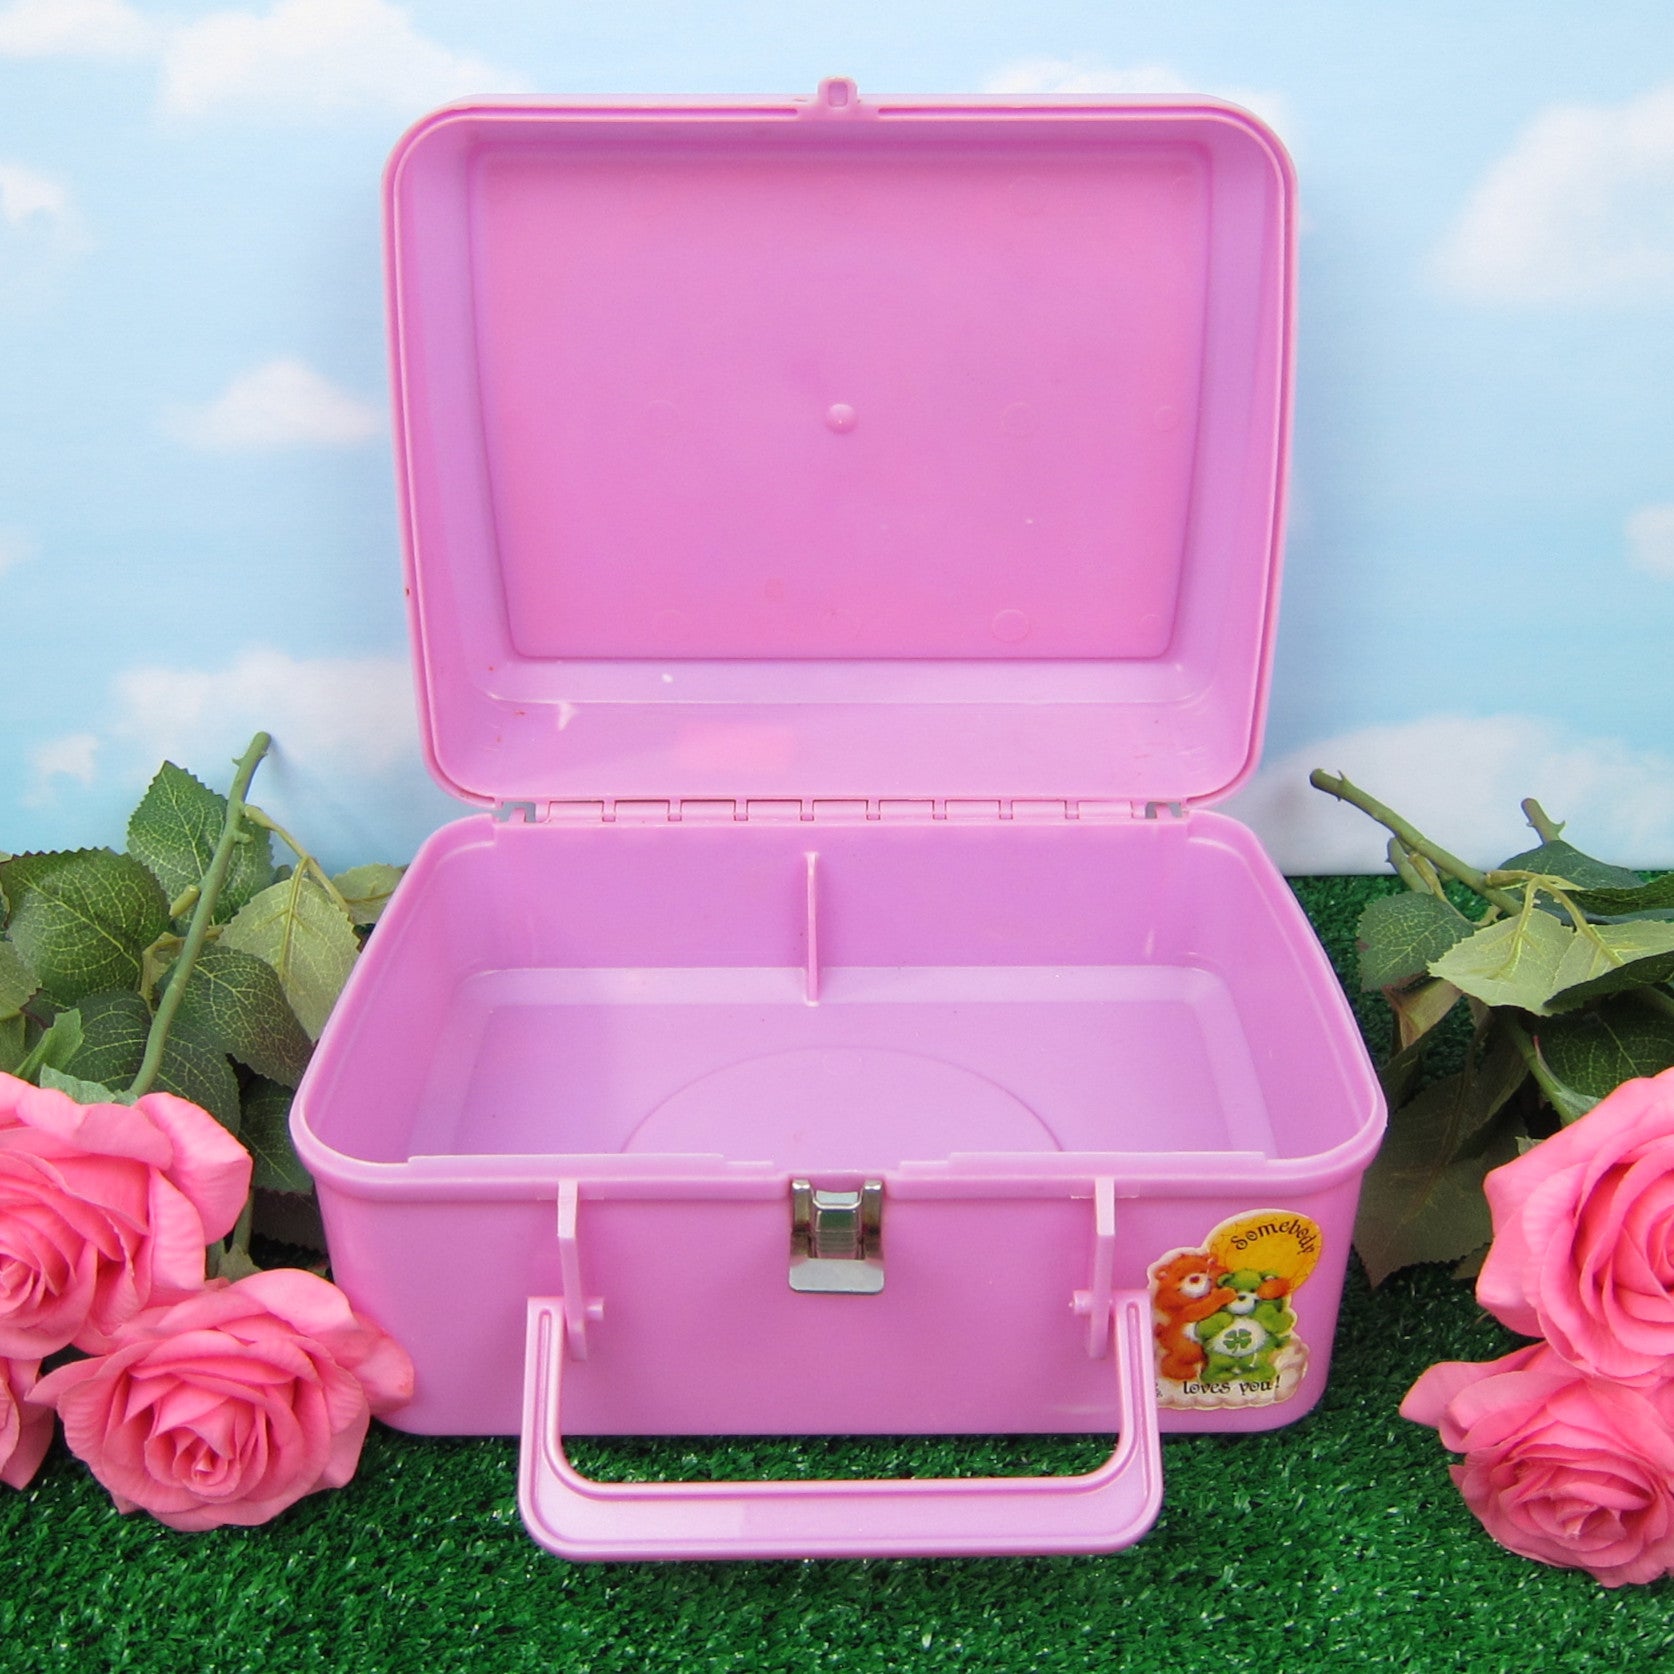 My Little Pony Lunch Box